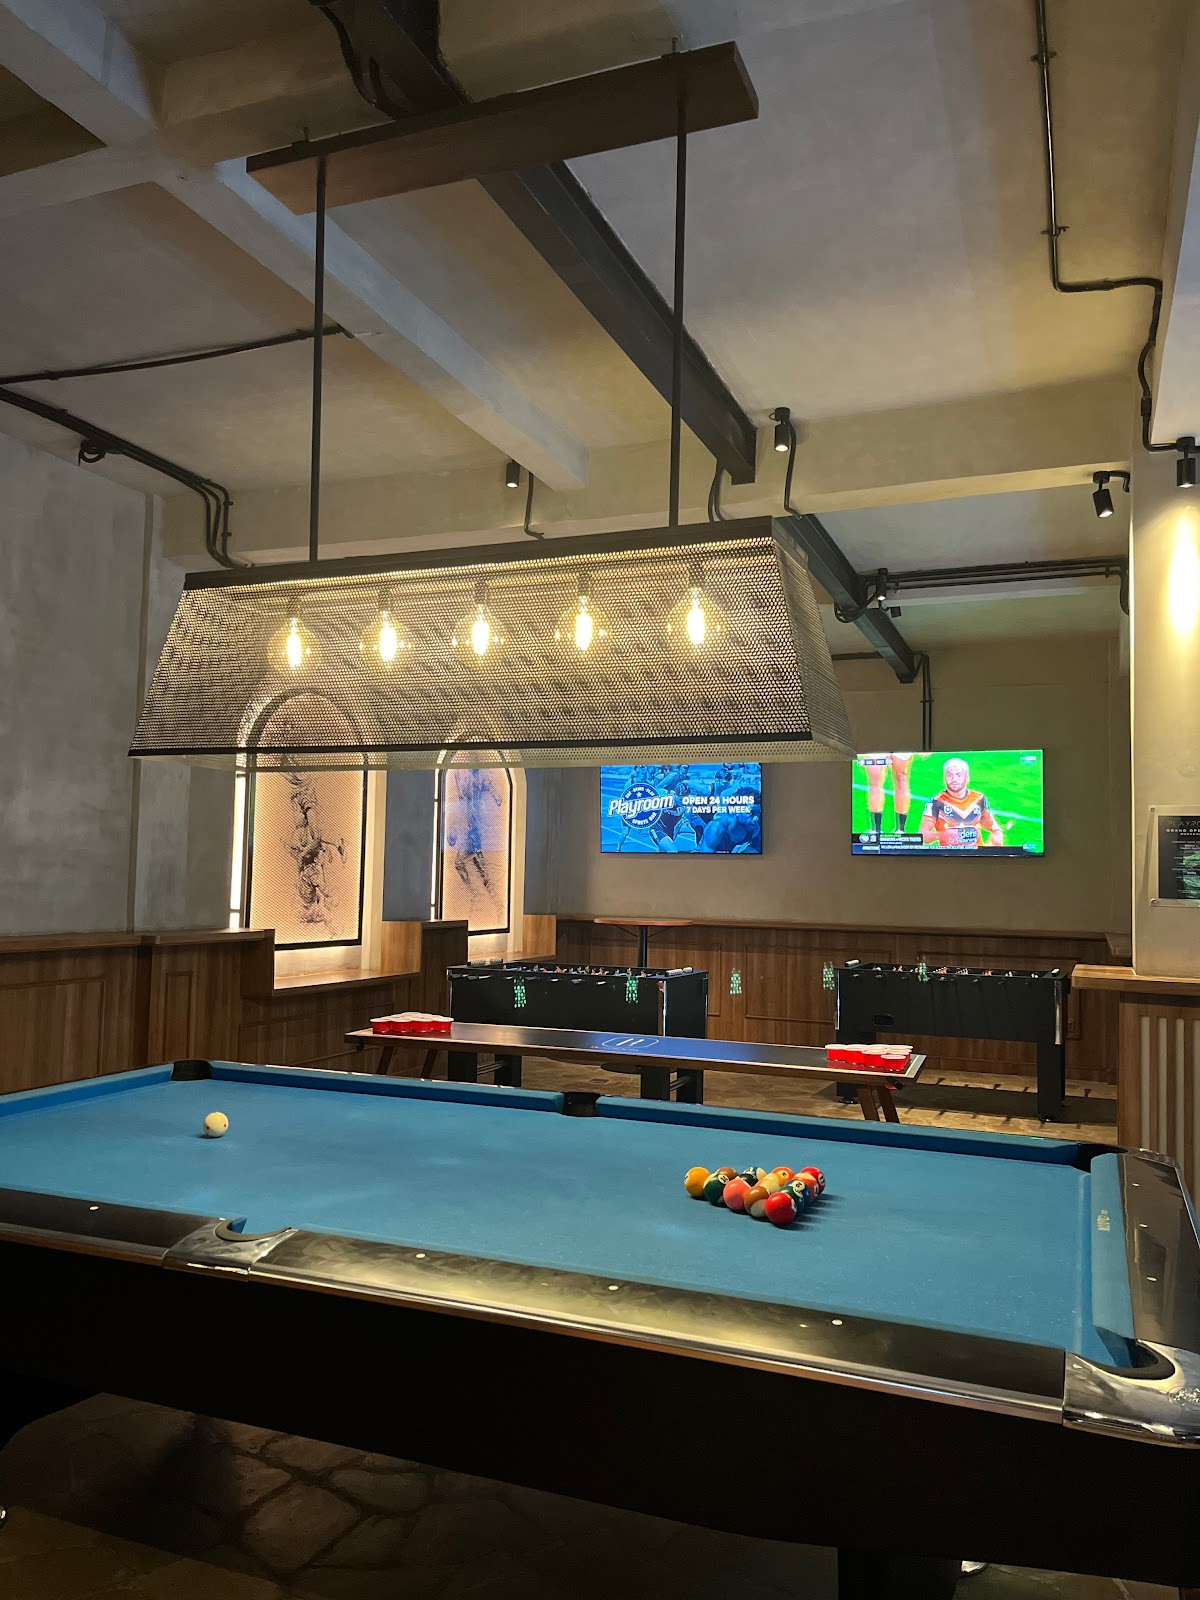 Playroom Sports Bar & Nightclub